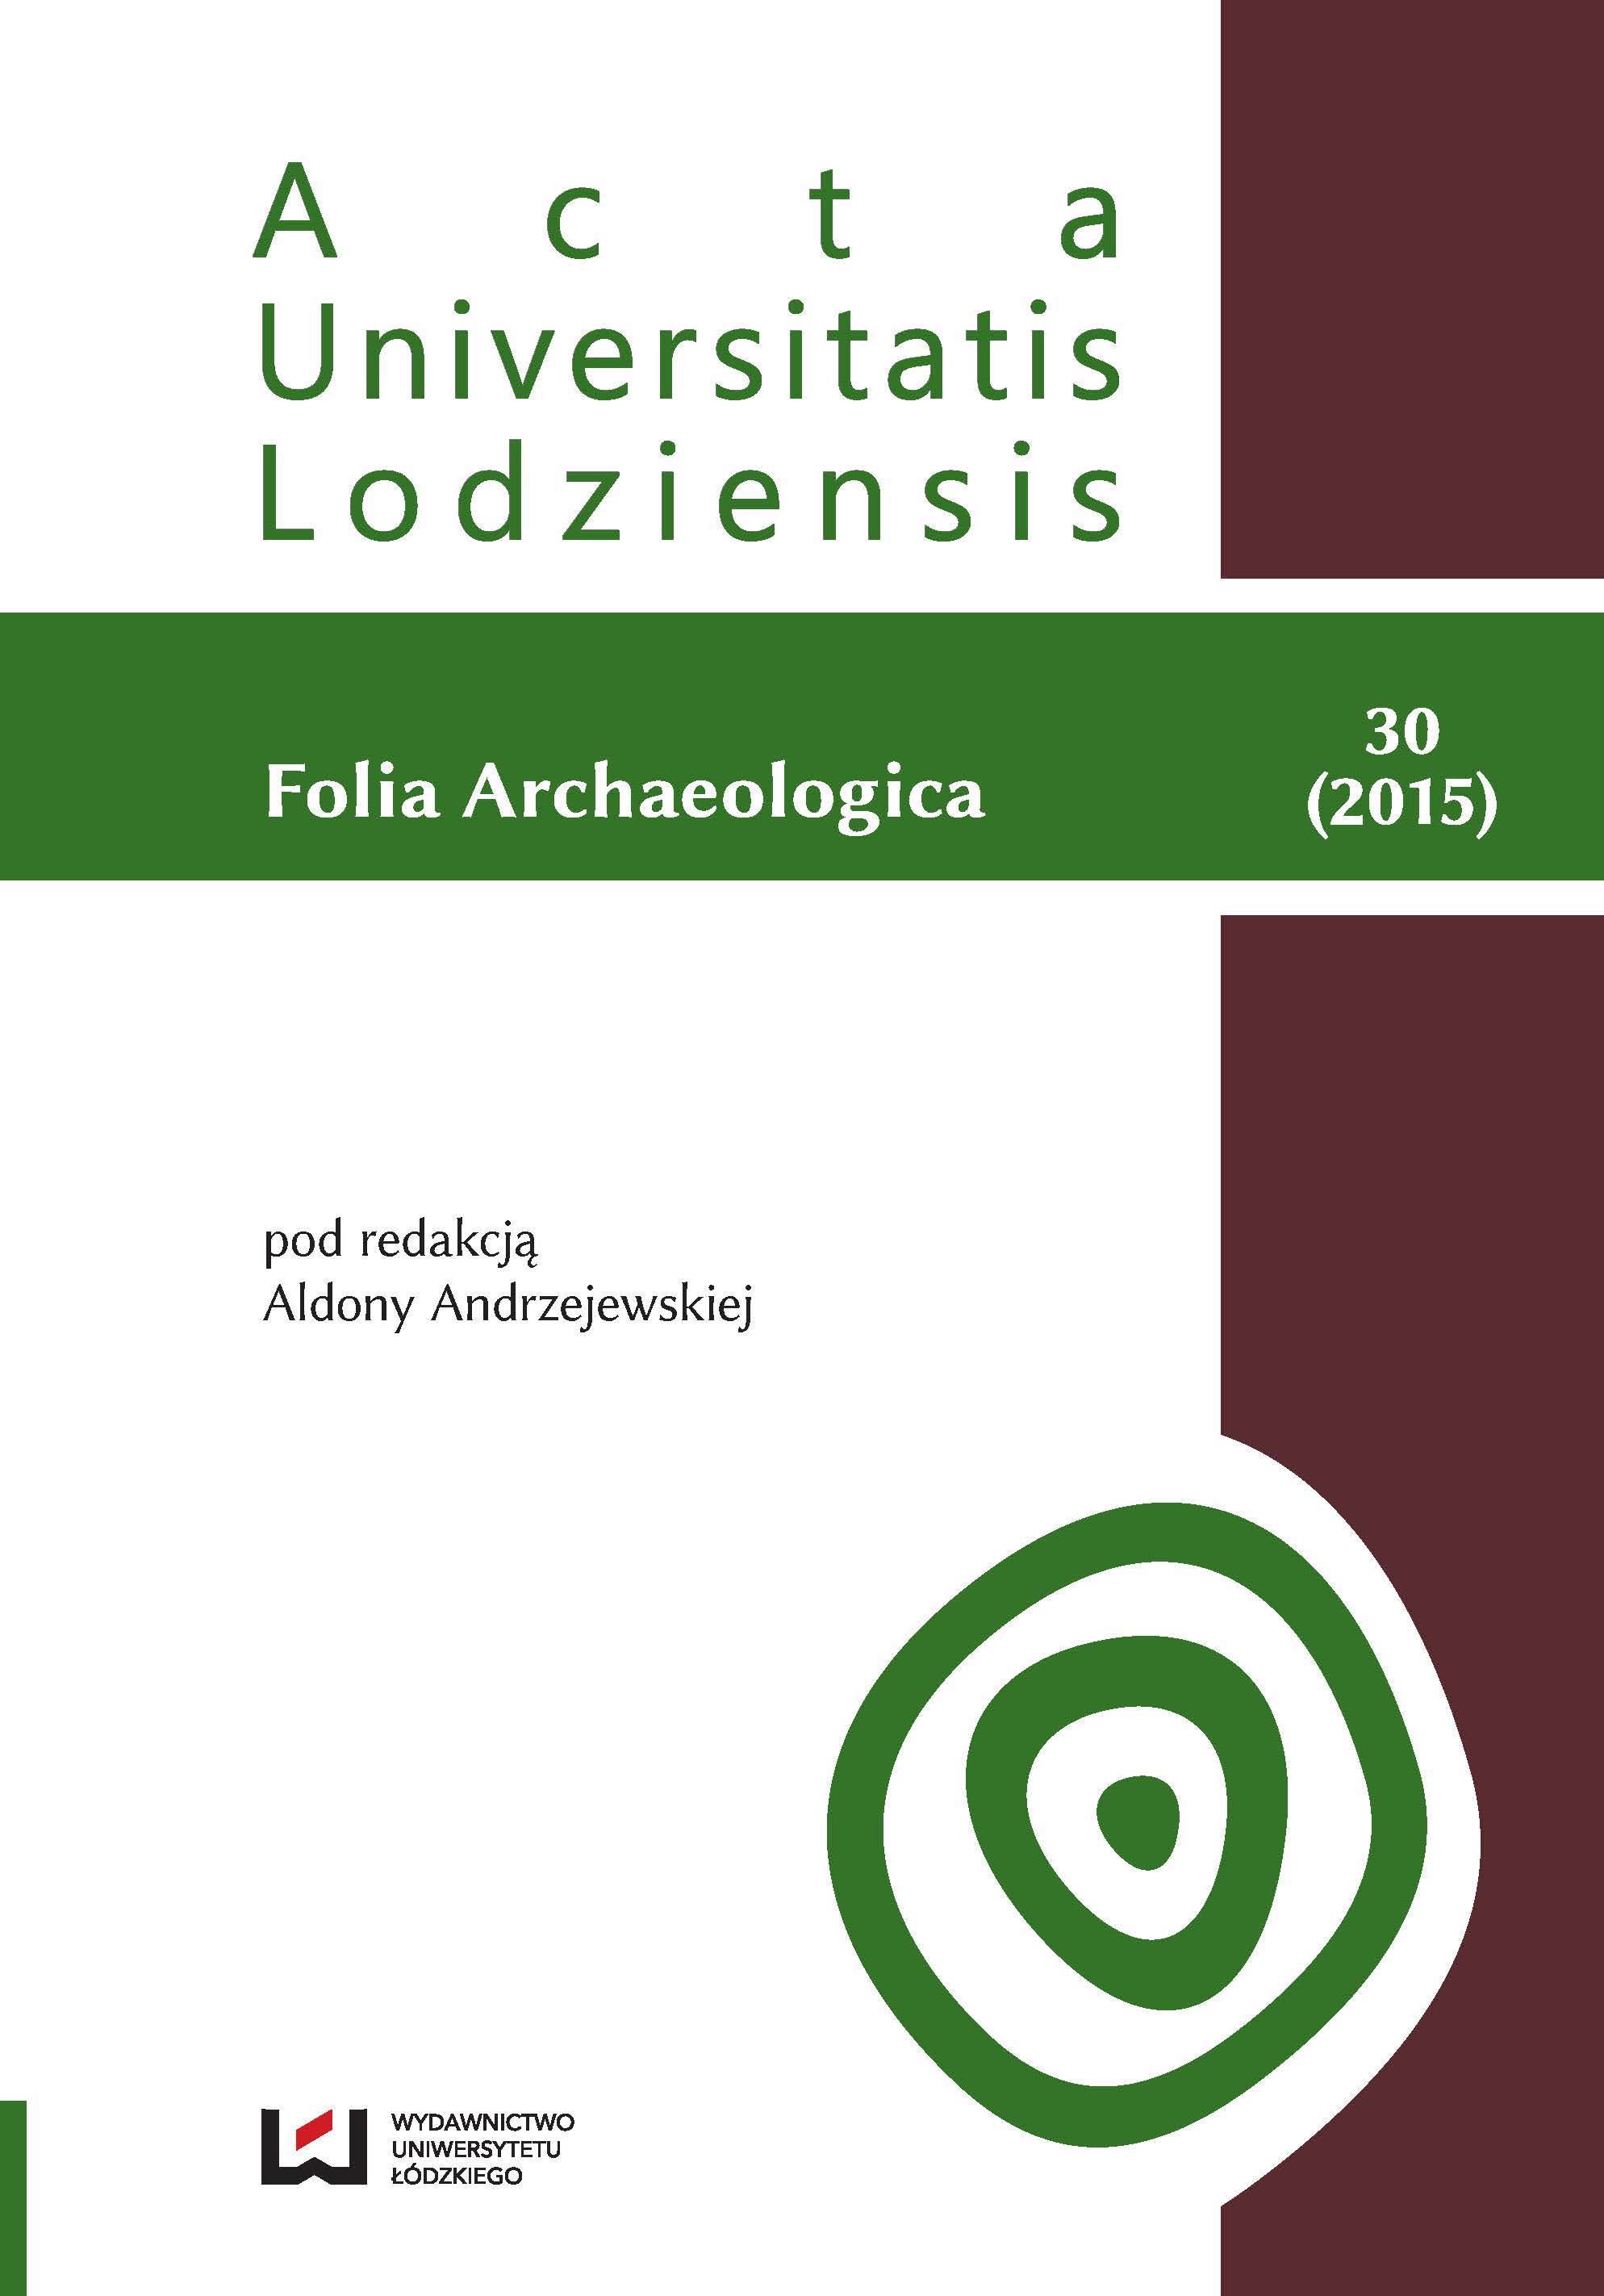 Anthropological analysis of skeletons from Stręgoborzyce, voi. Małopolska Cover Image